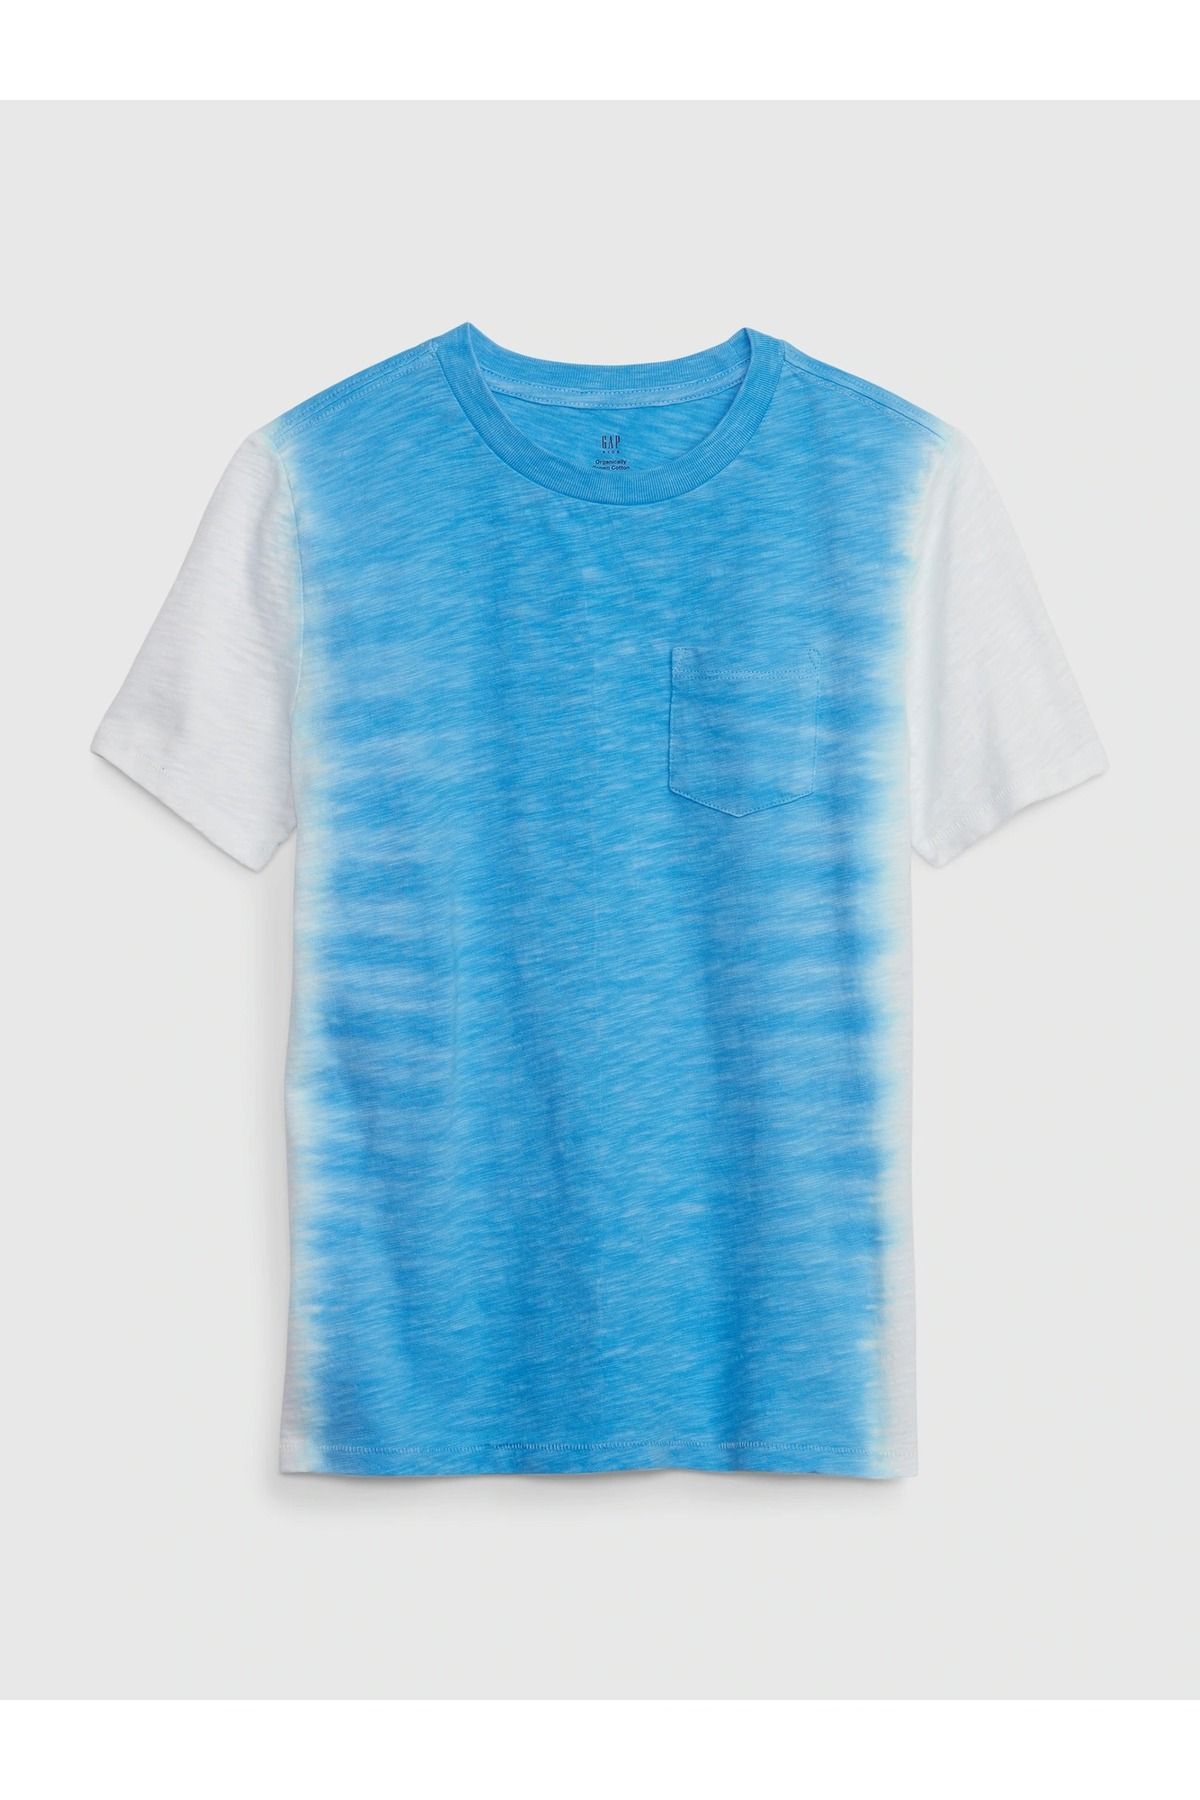 GAP Erkek Çocuk Mavi %100 Organik Pamuk Cepli T-shirt